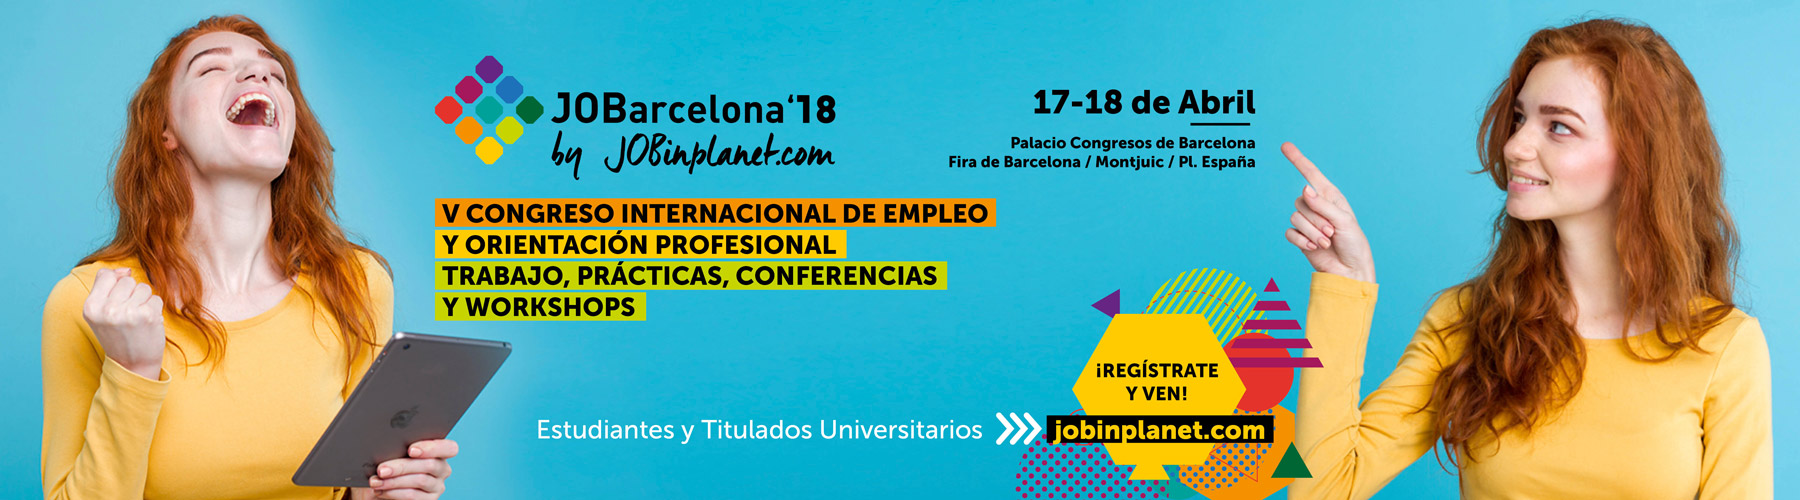 cabecera web congreso empleo barcelona